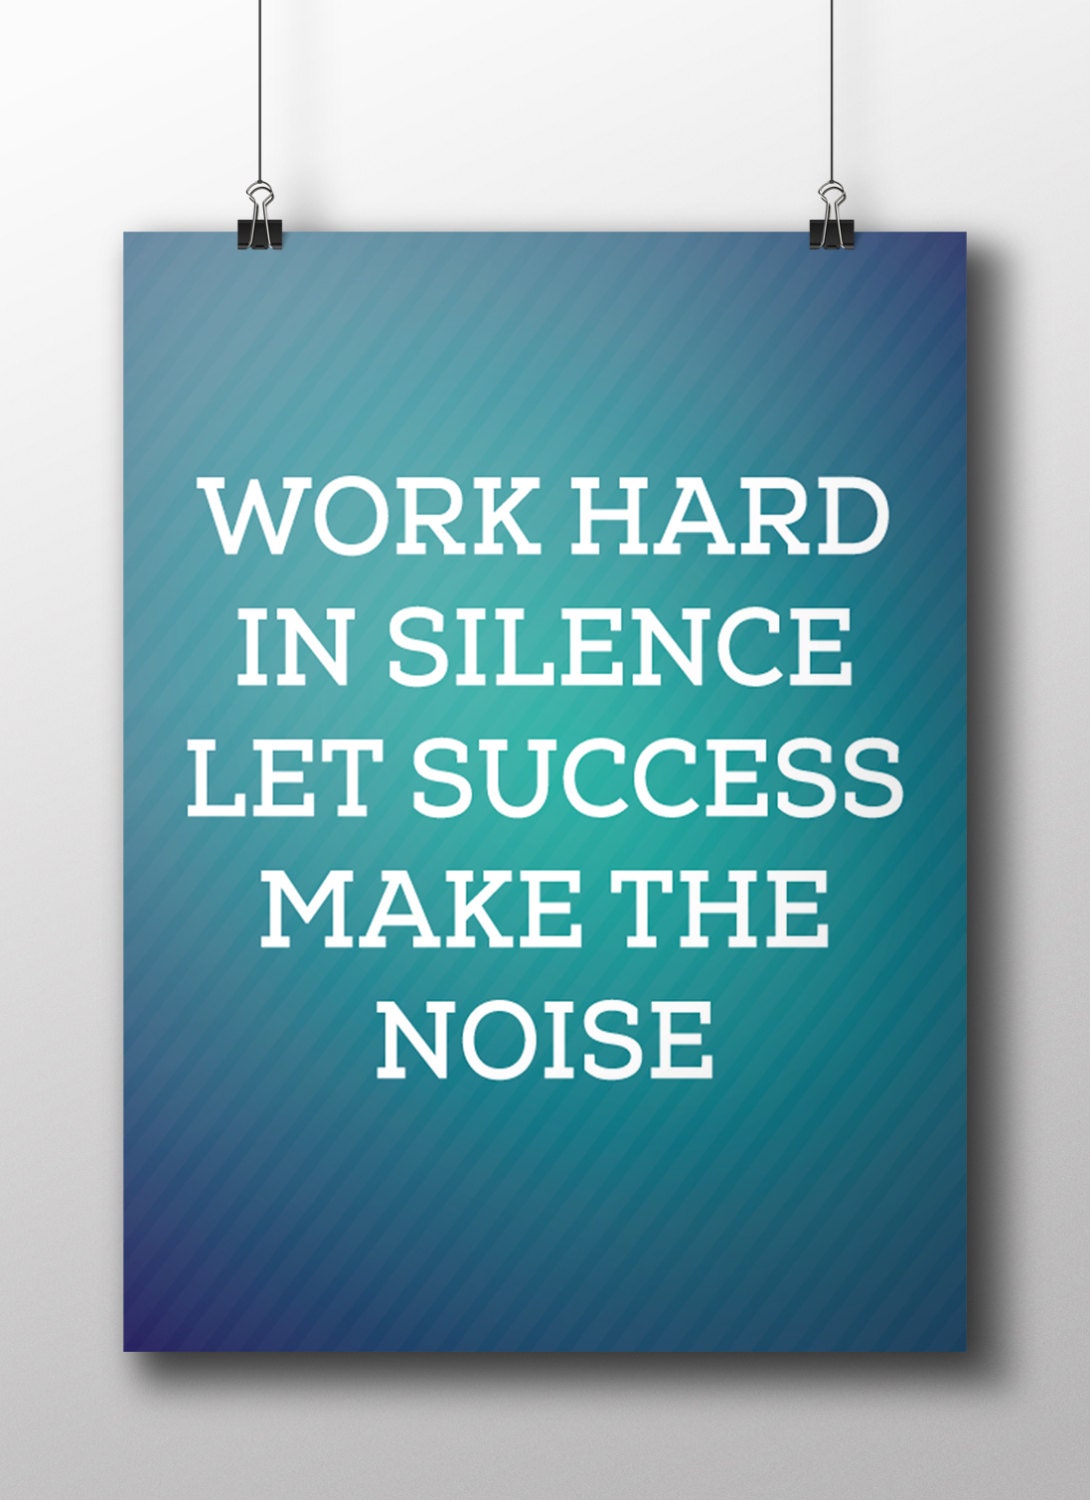 Work hard in silence let success make the noise- poster design, DIY ...